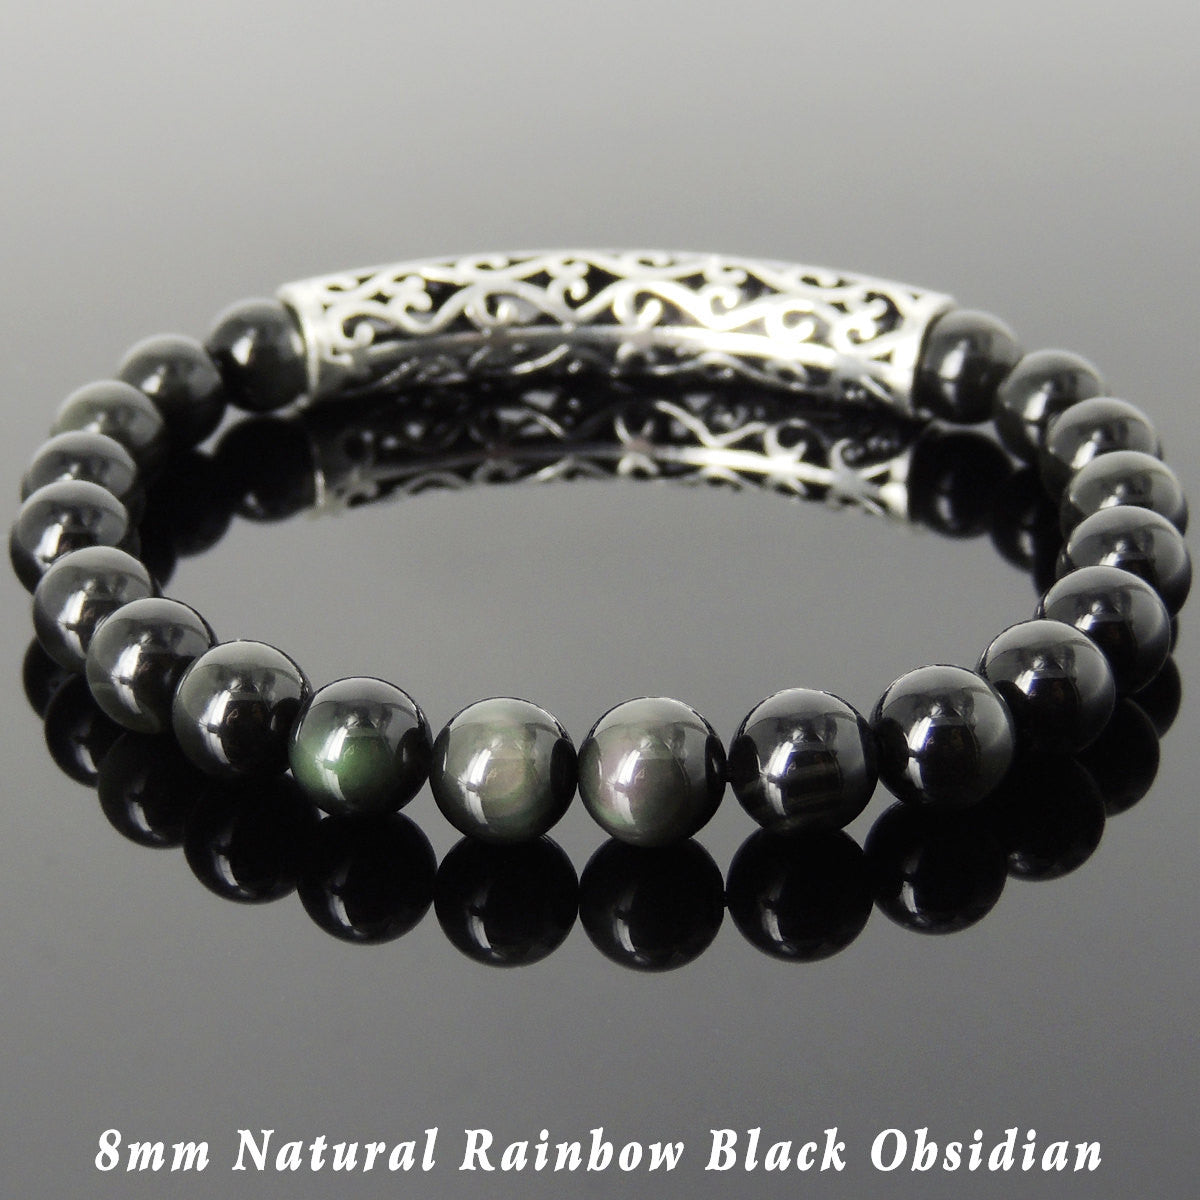 8mm Rainbow Black Obsidian Healing Gemstone Bracelet with S925 Sterling Silver Lotus Charm - Handmade by Gem & Silver BR1033